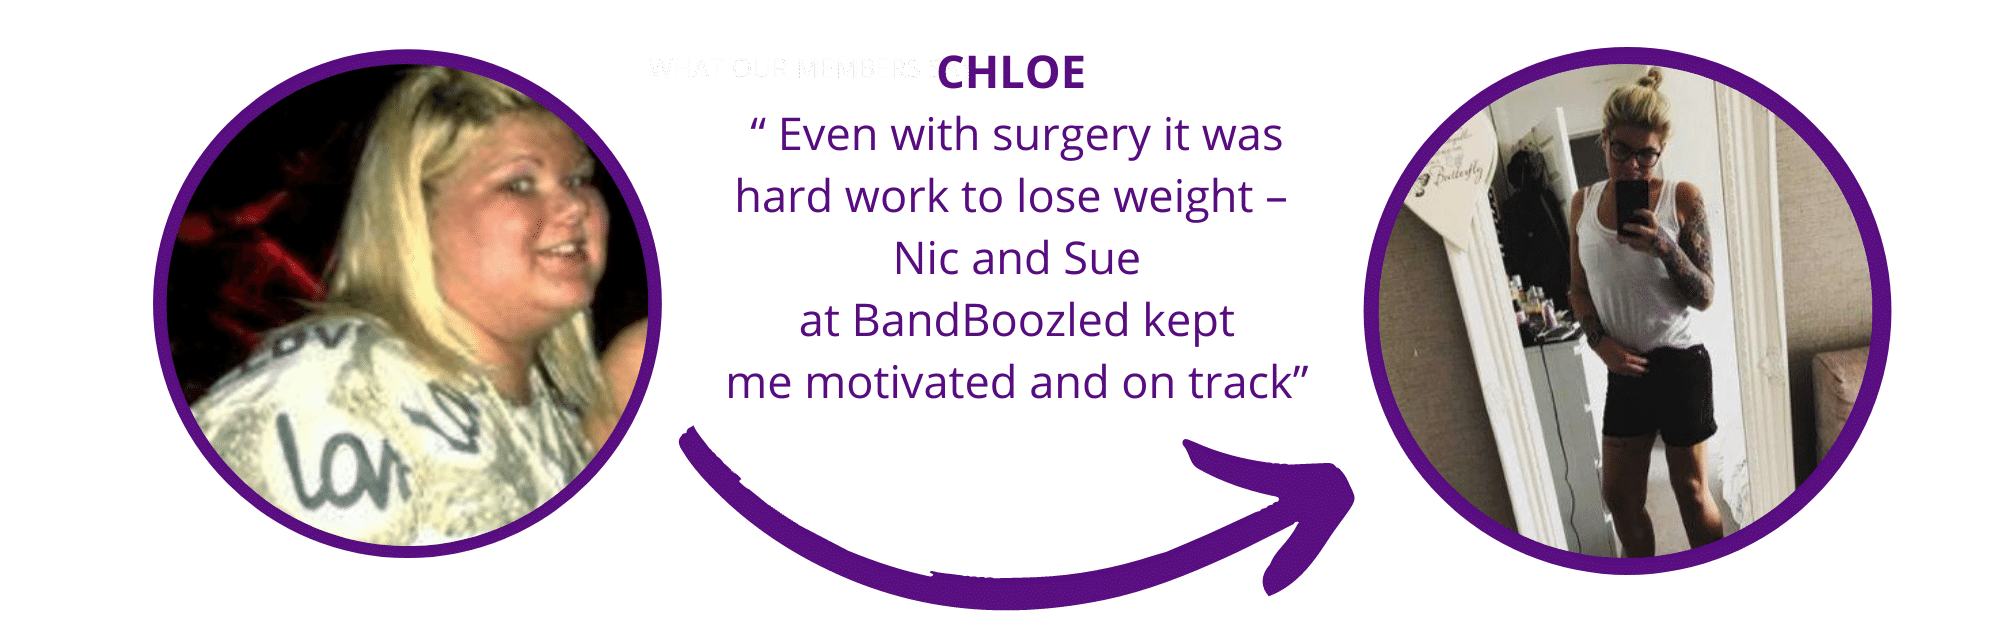 Bandboozled Weight Loss Surgery Support Testimonial 